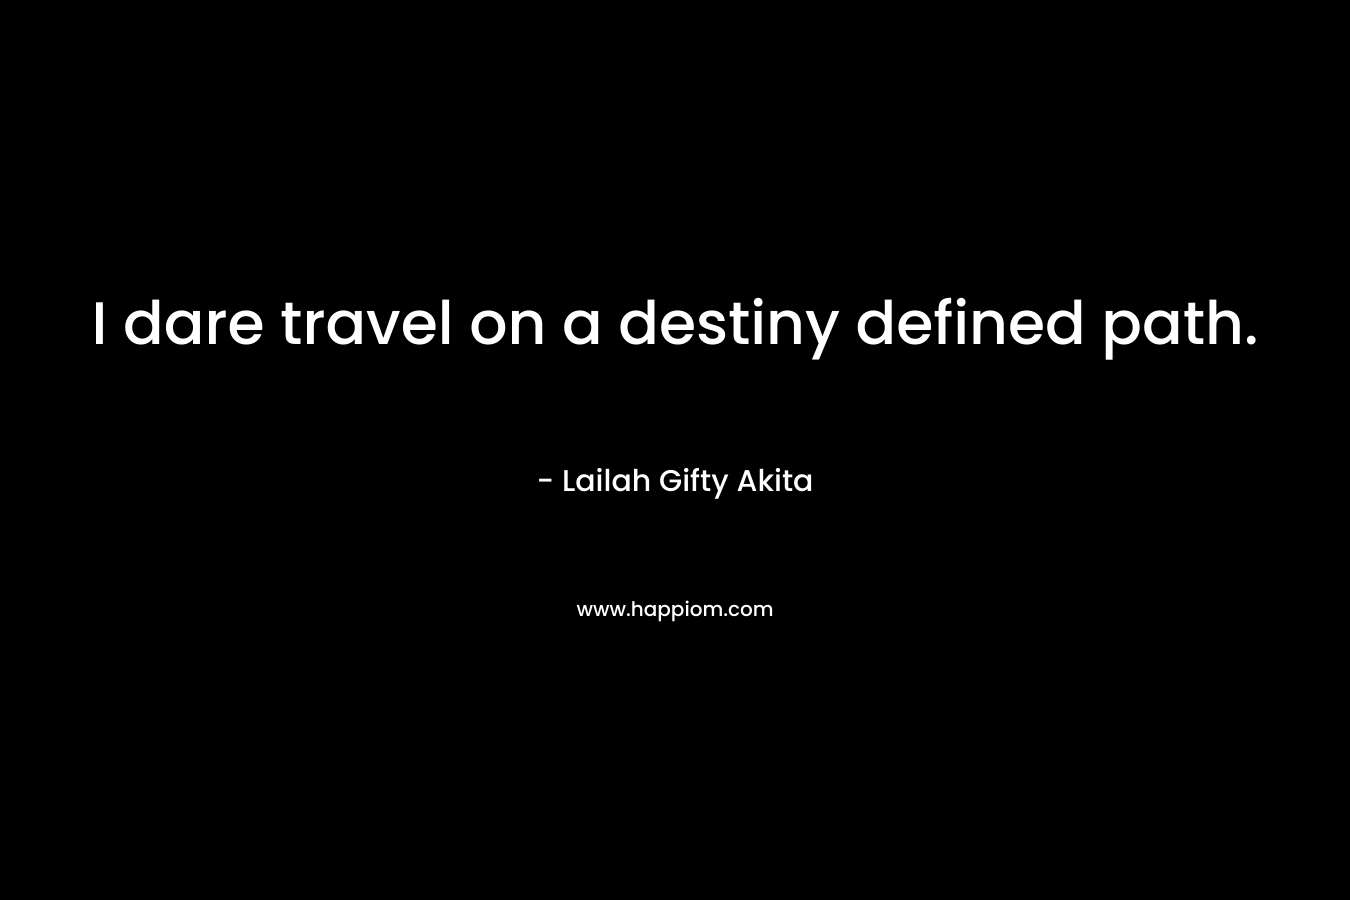 I dare travel on a destiny defined path.